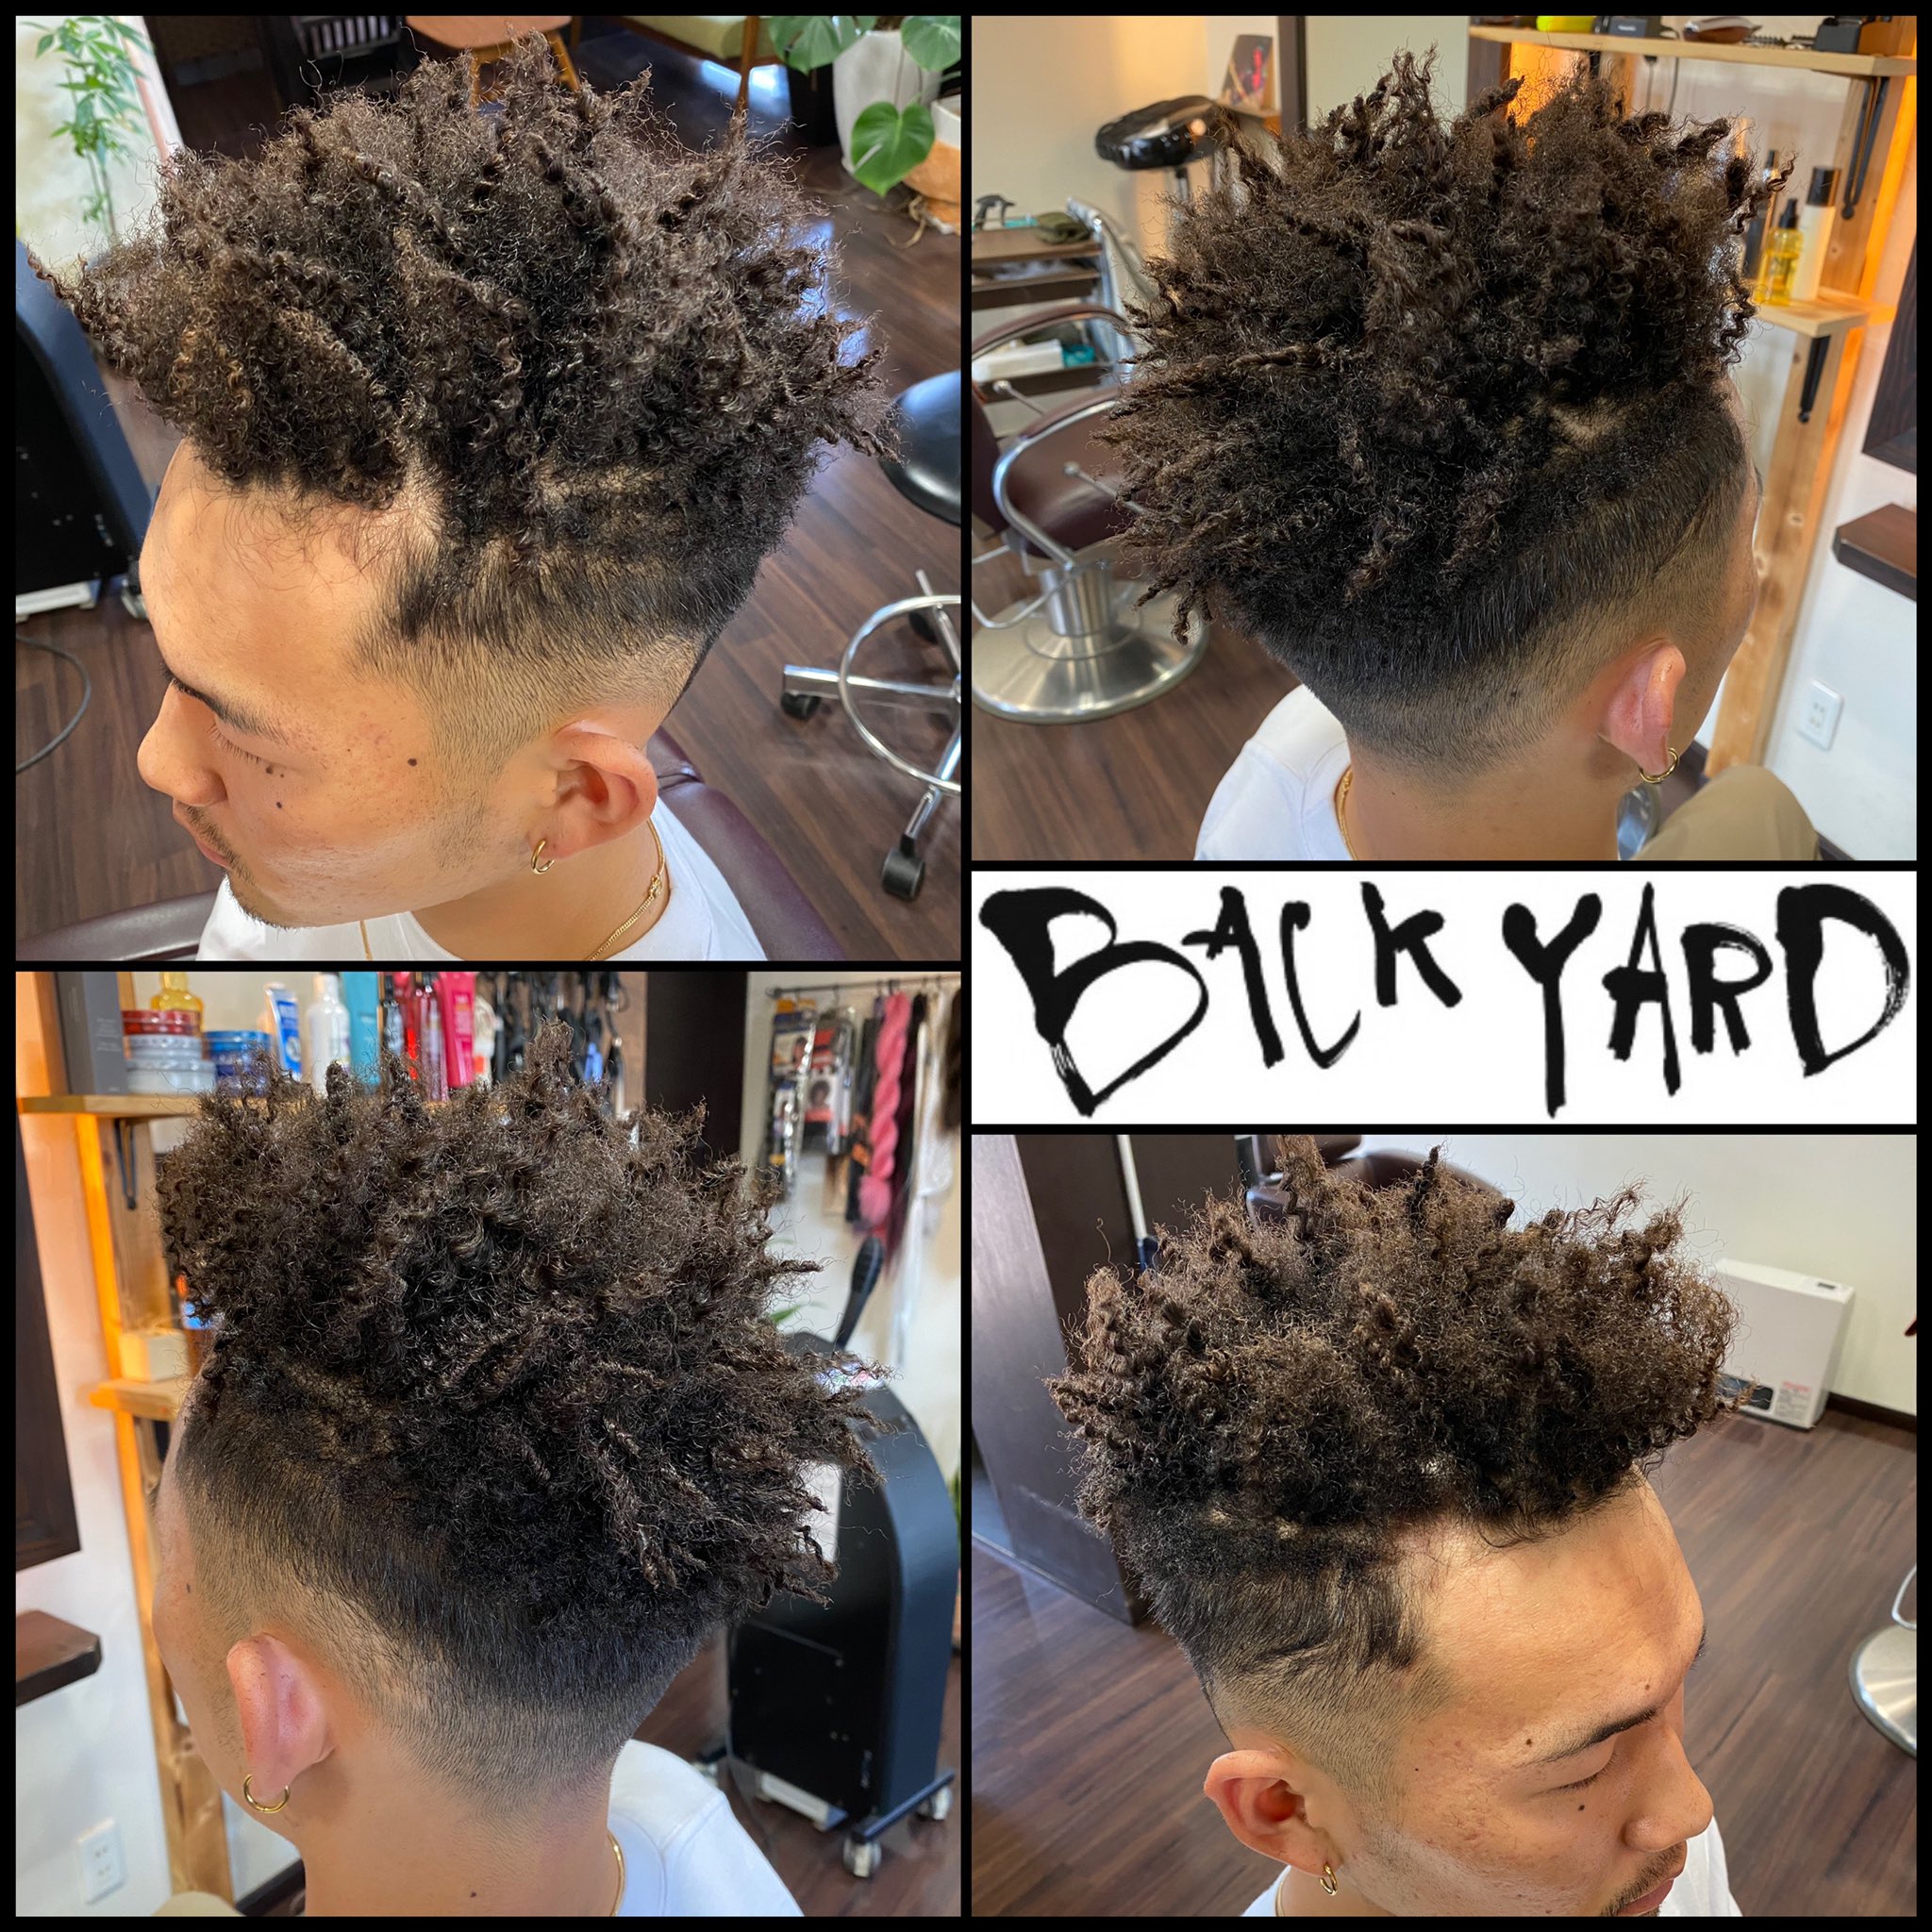 Backyard Peko 針金パーマ Hair Hairstyle Springdread Dread Fade Hiphopfashion Streetfashion Barber ヘア ヘアスタイル 針金パーマ スプリングドレッド 特殊ヘア 特殊パーマ 群馬 太田市 ヘアサロン バーバー Backyard 理容師